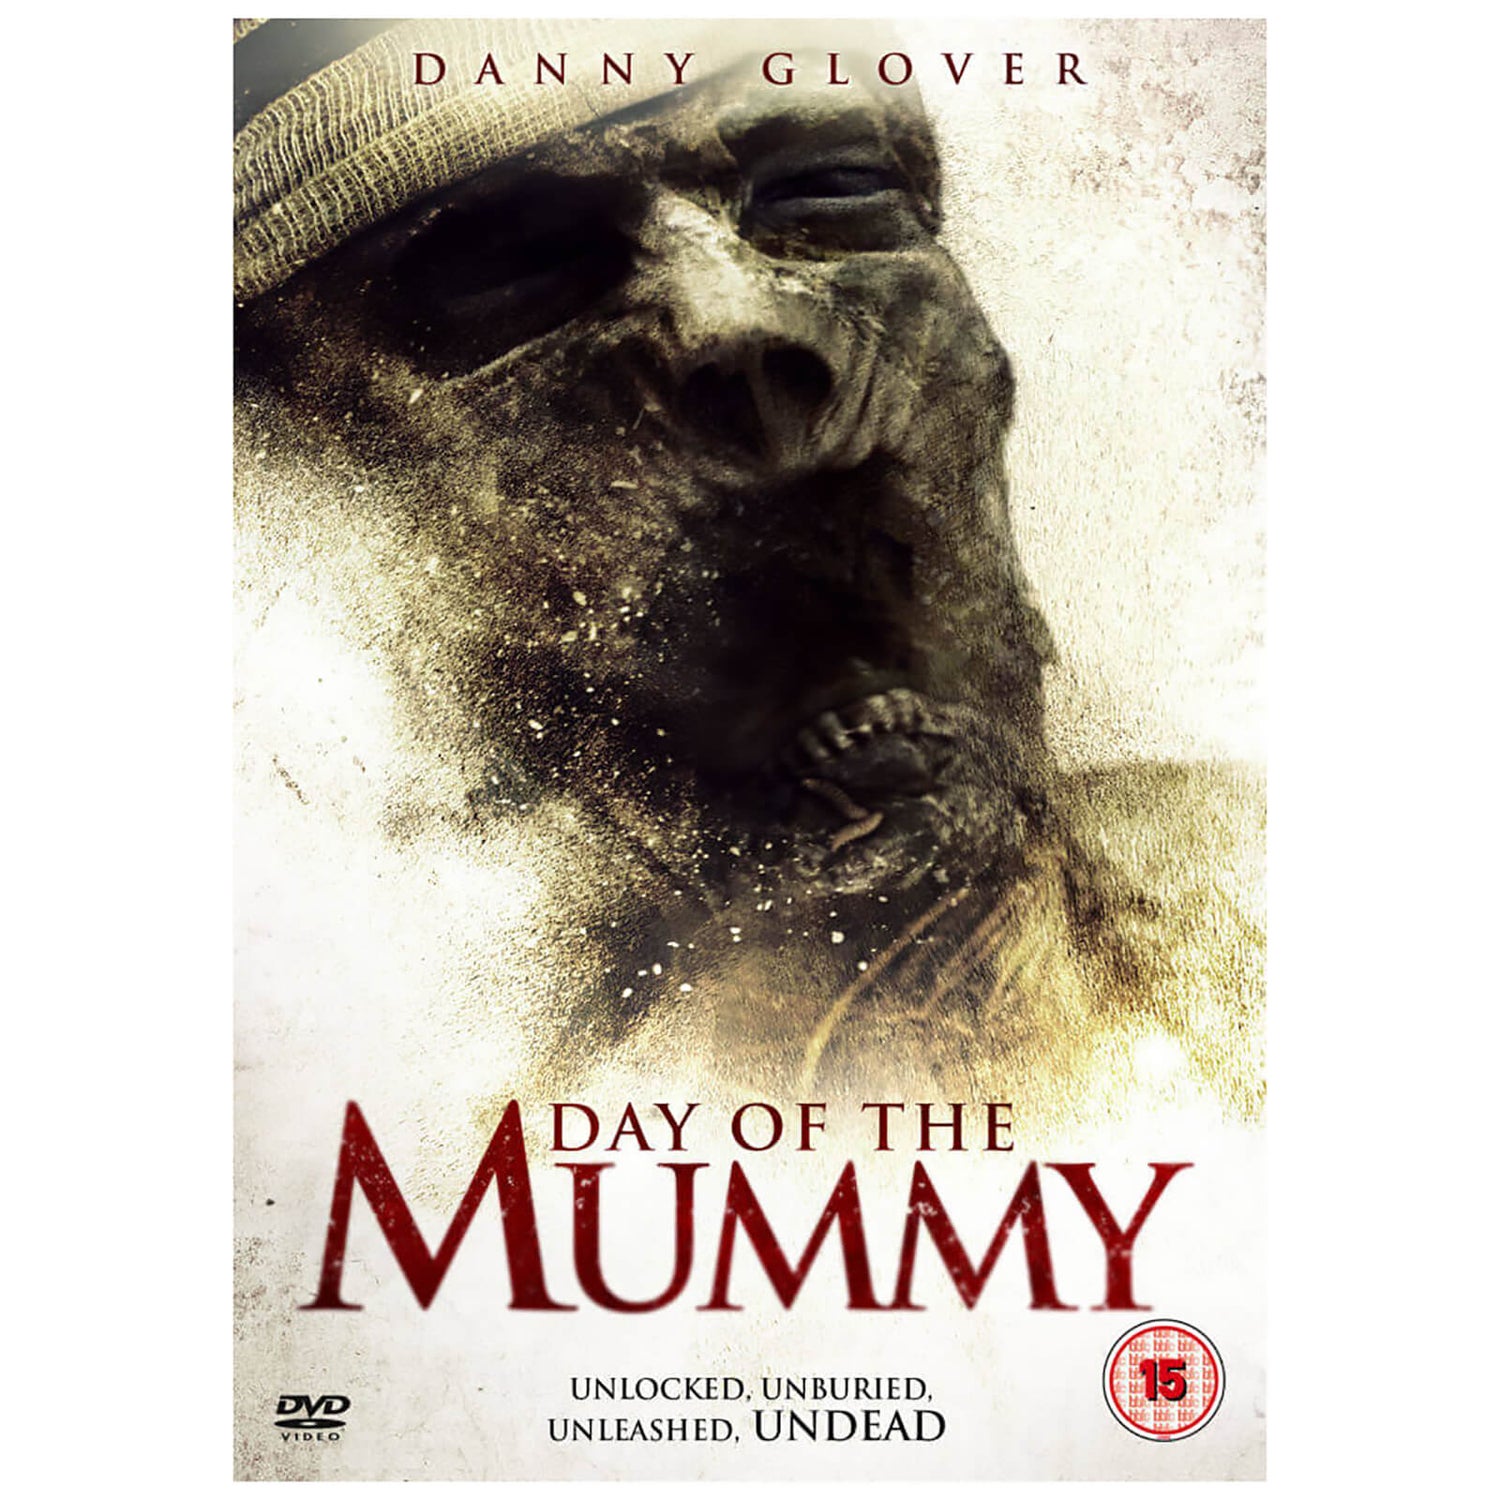 Tag der Mumie